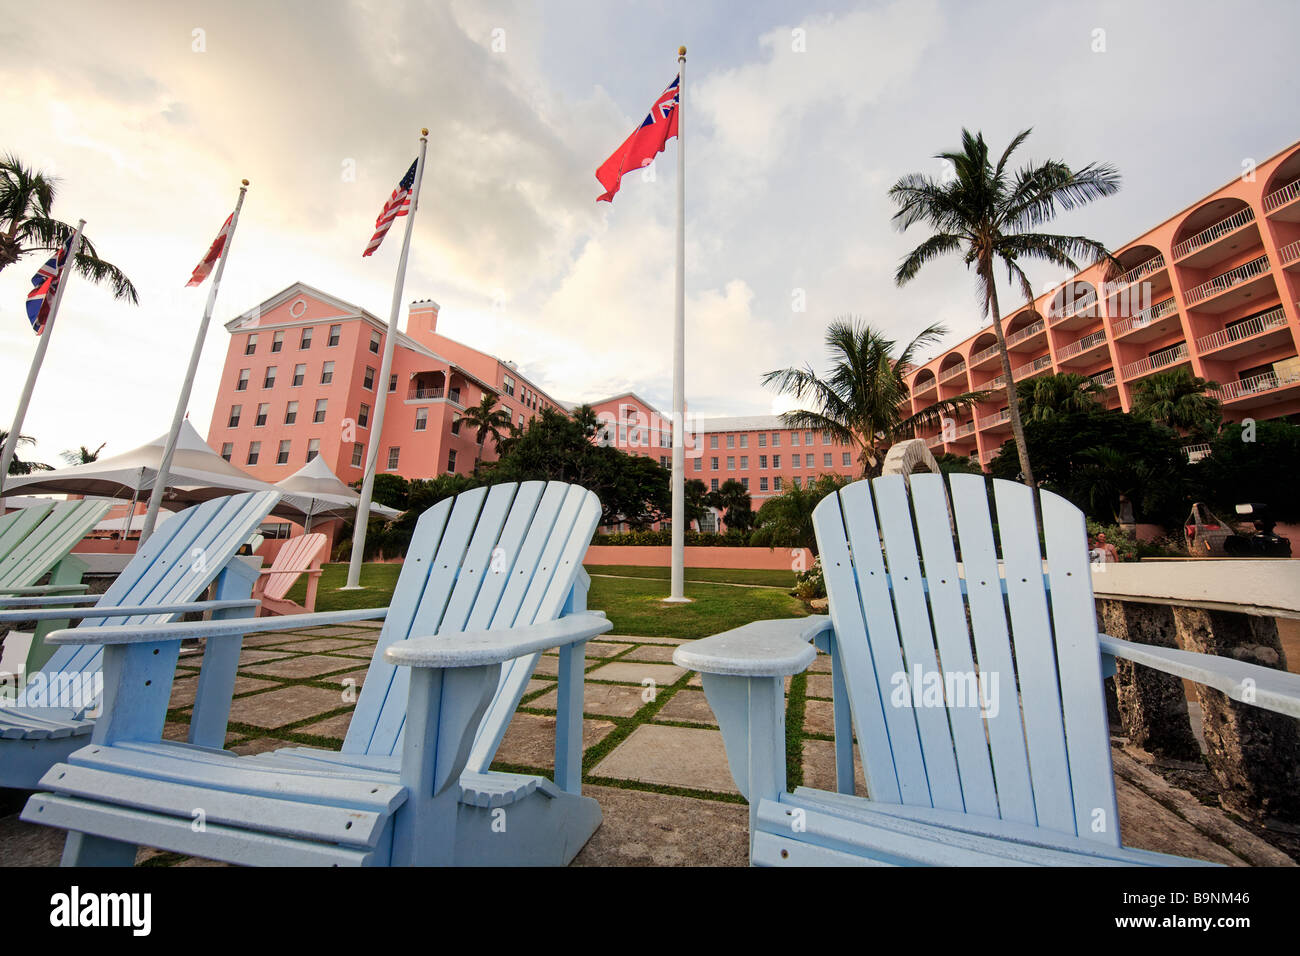 Low Angle View of Adirondack Chairs With the Hamilton Princess Hotel Bermuda Stock Photo